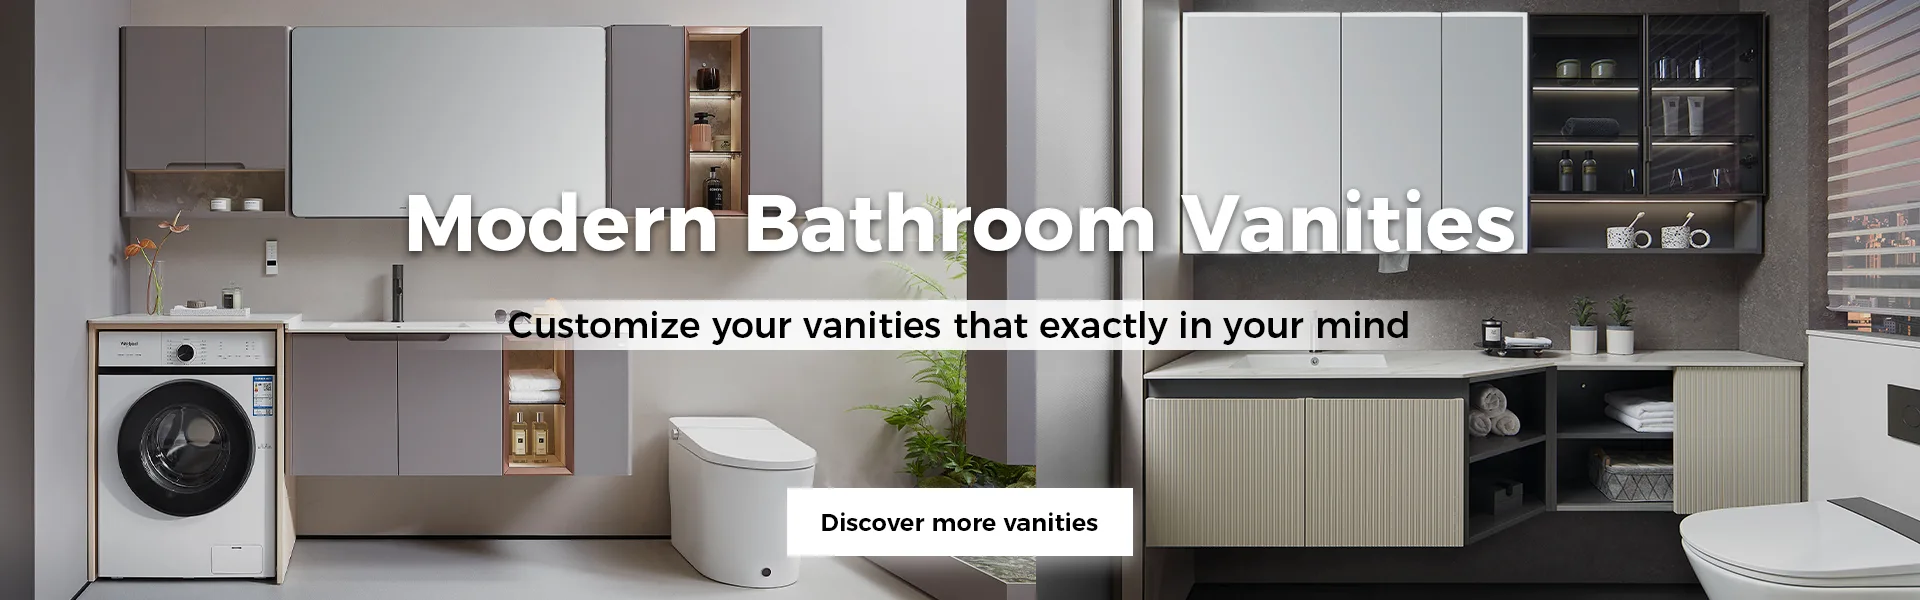 modern-bathroom-vanities